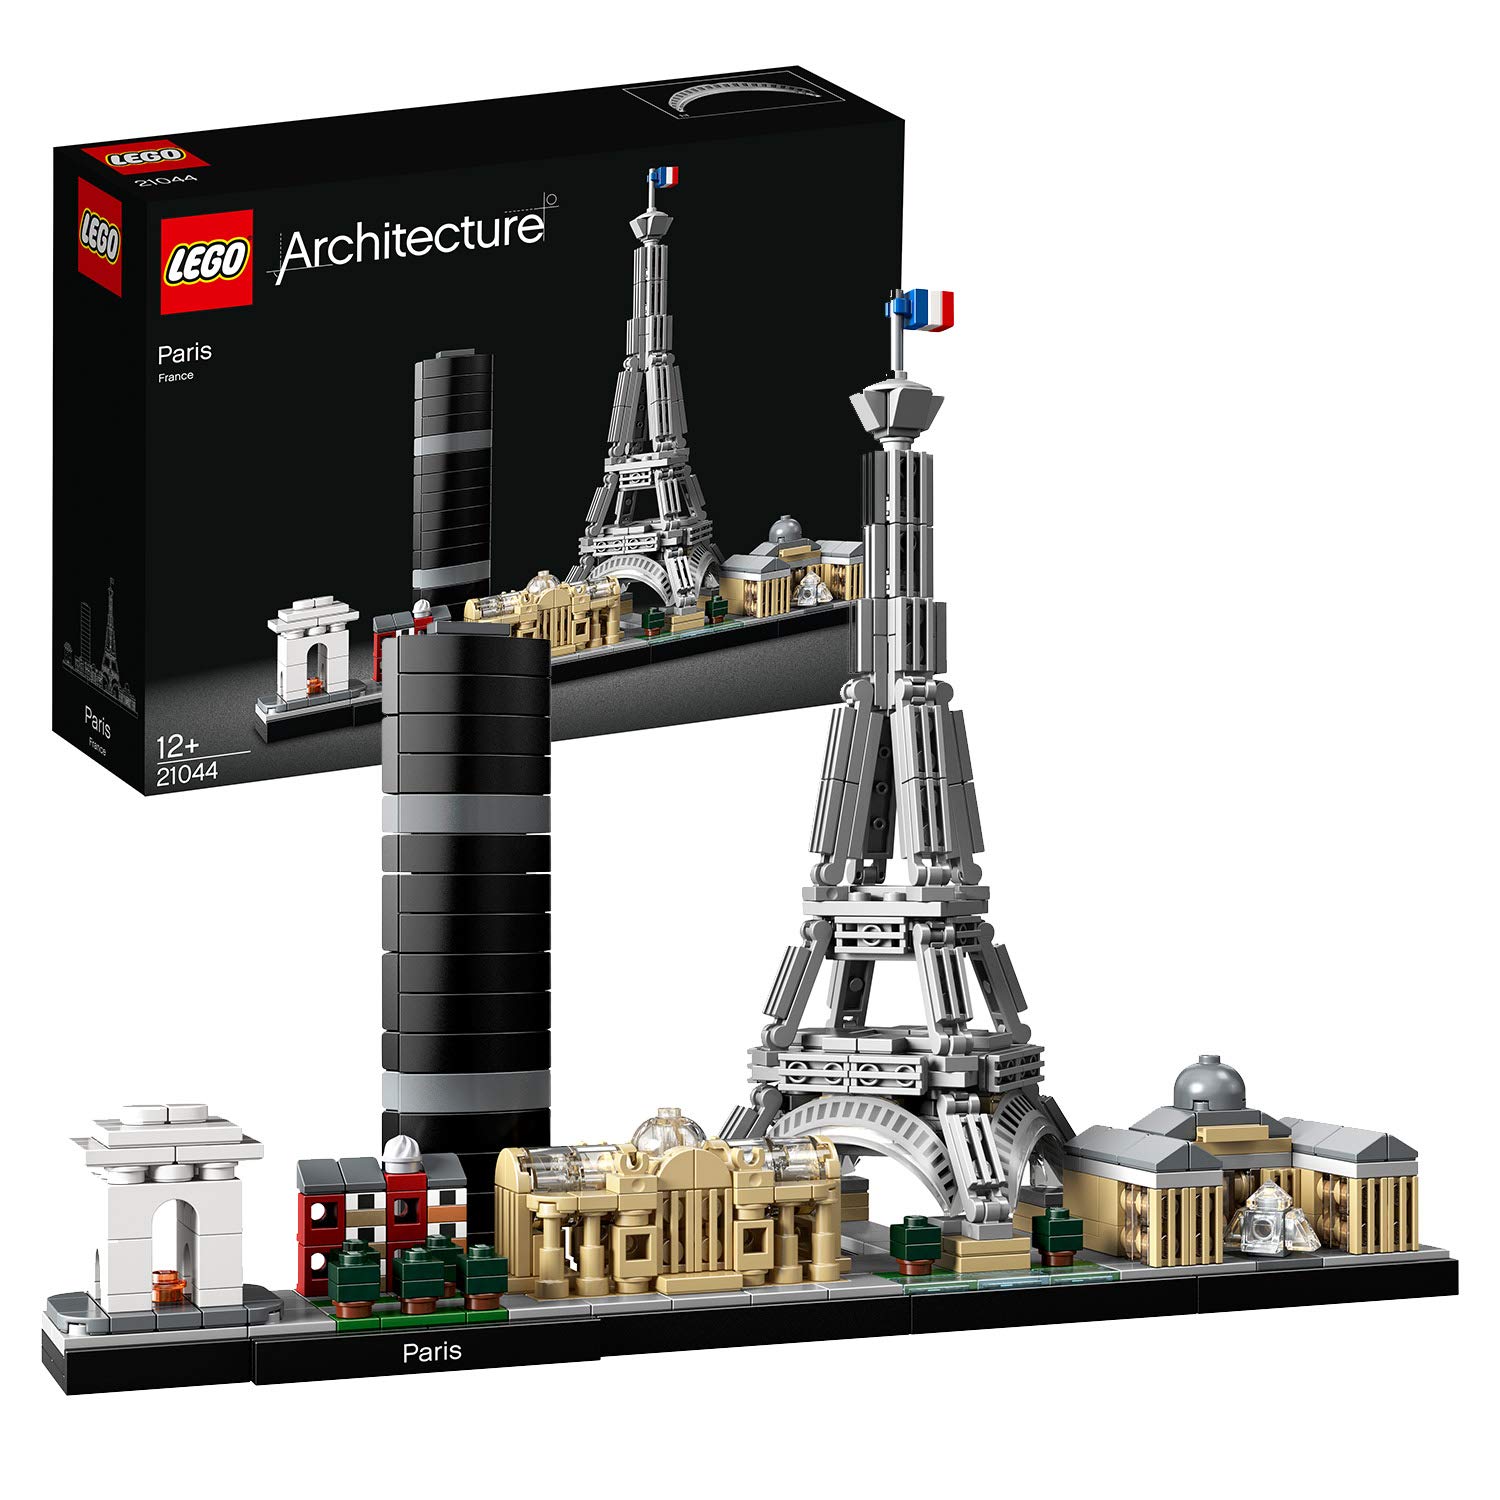 LEGO Architecture París solo 30€